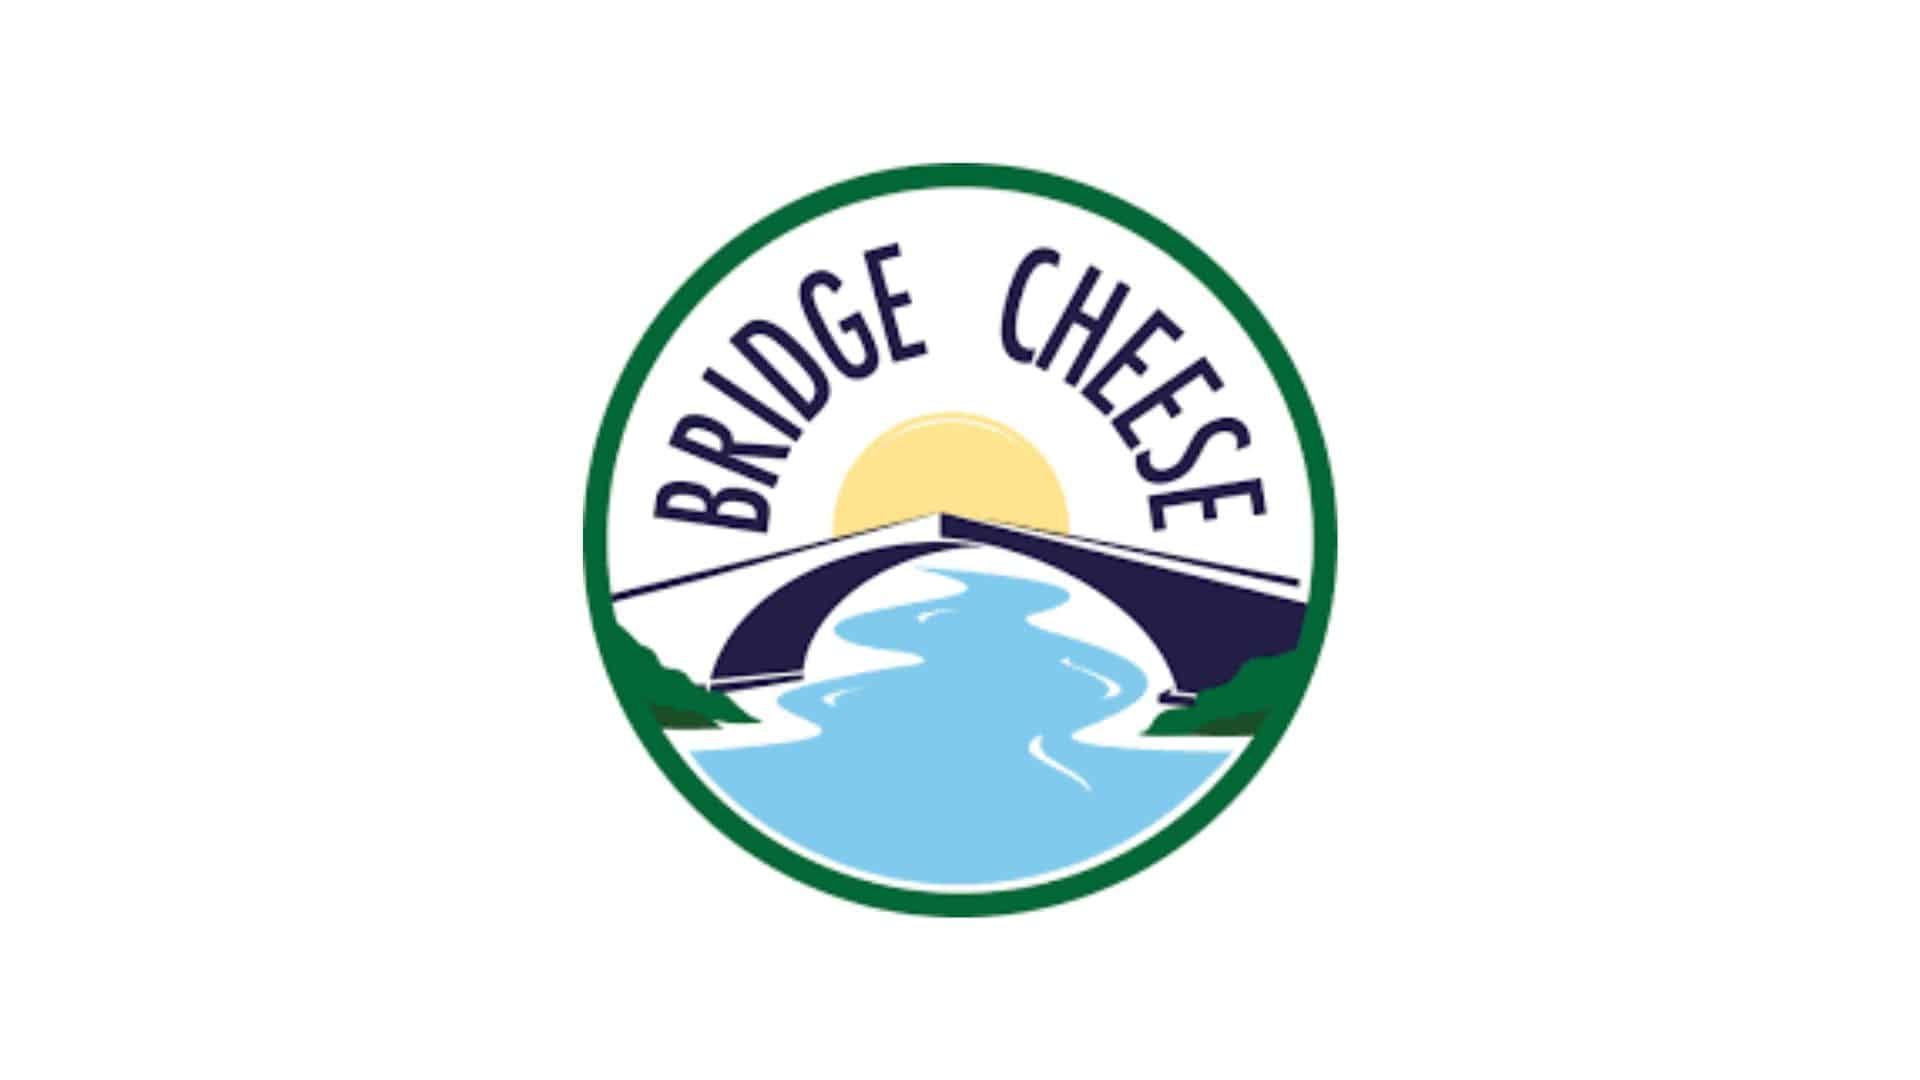 Bridge Cheese